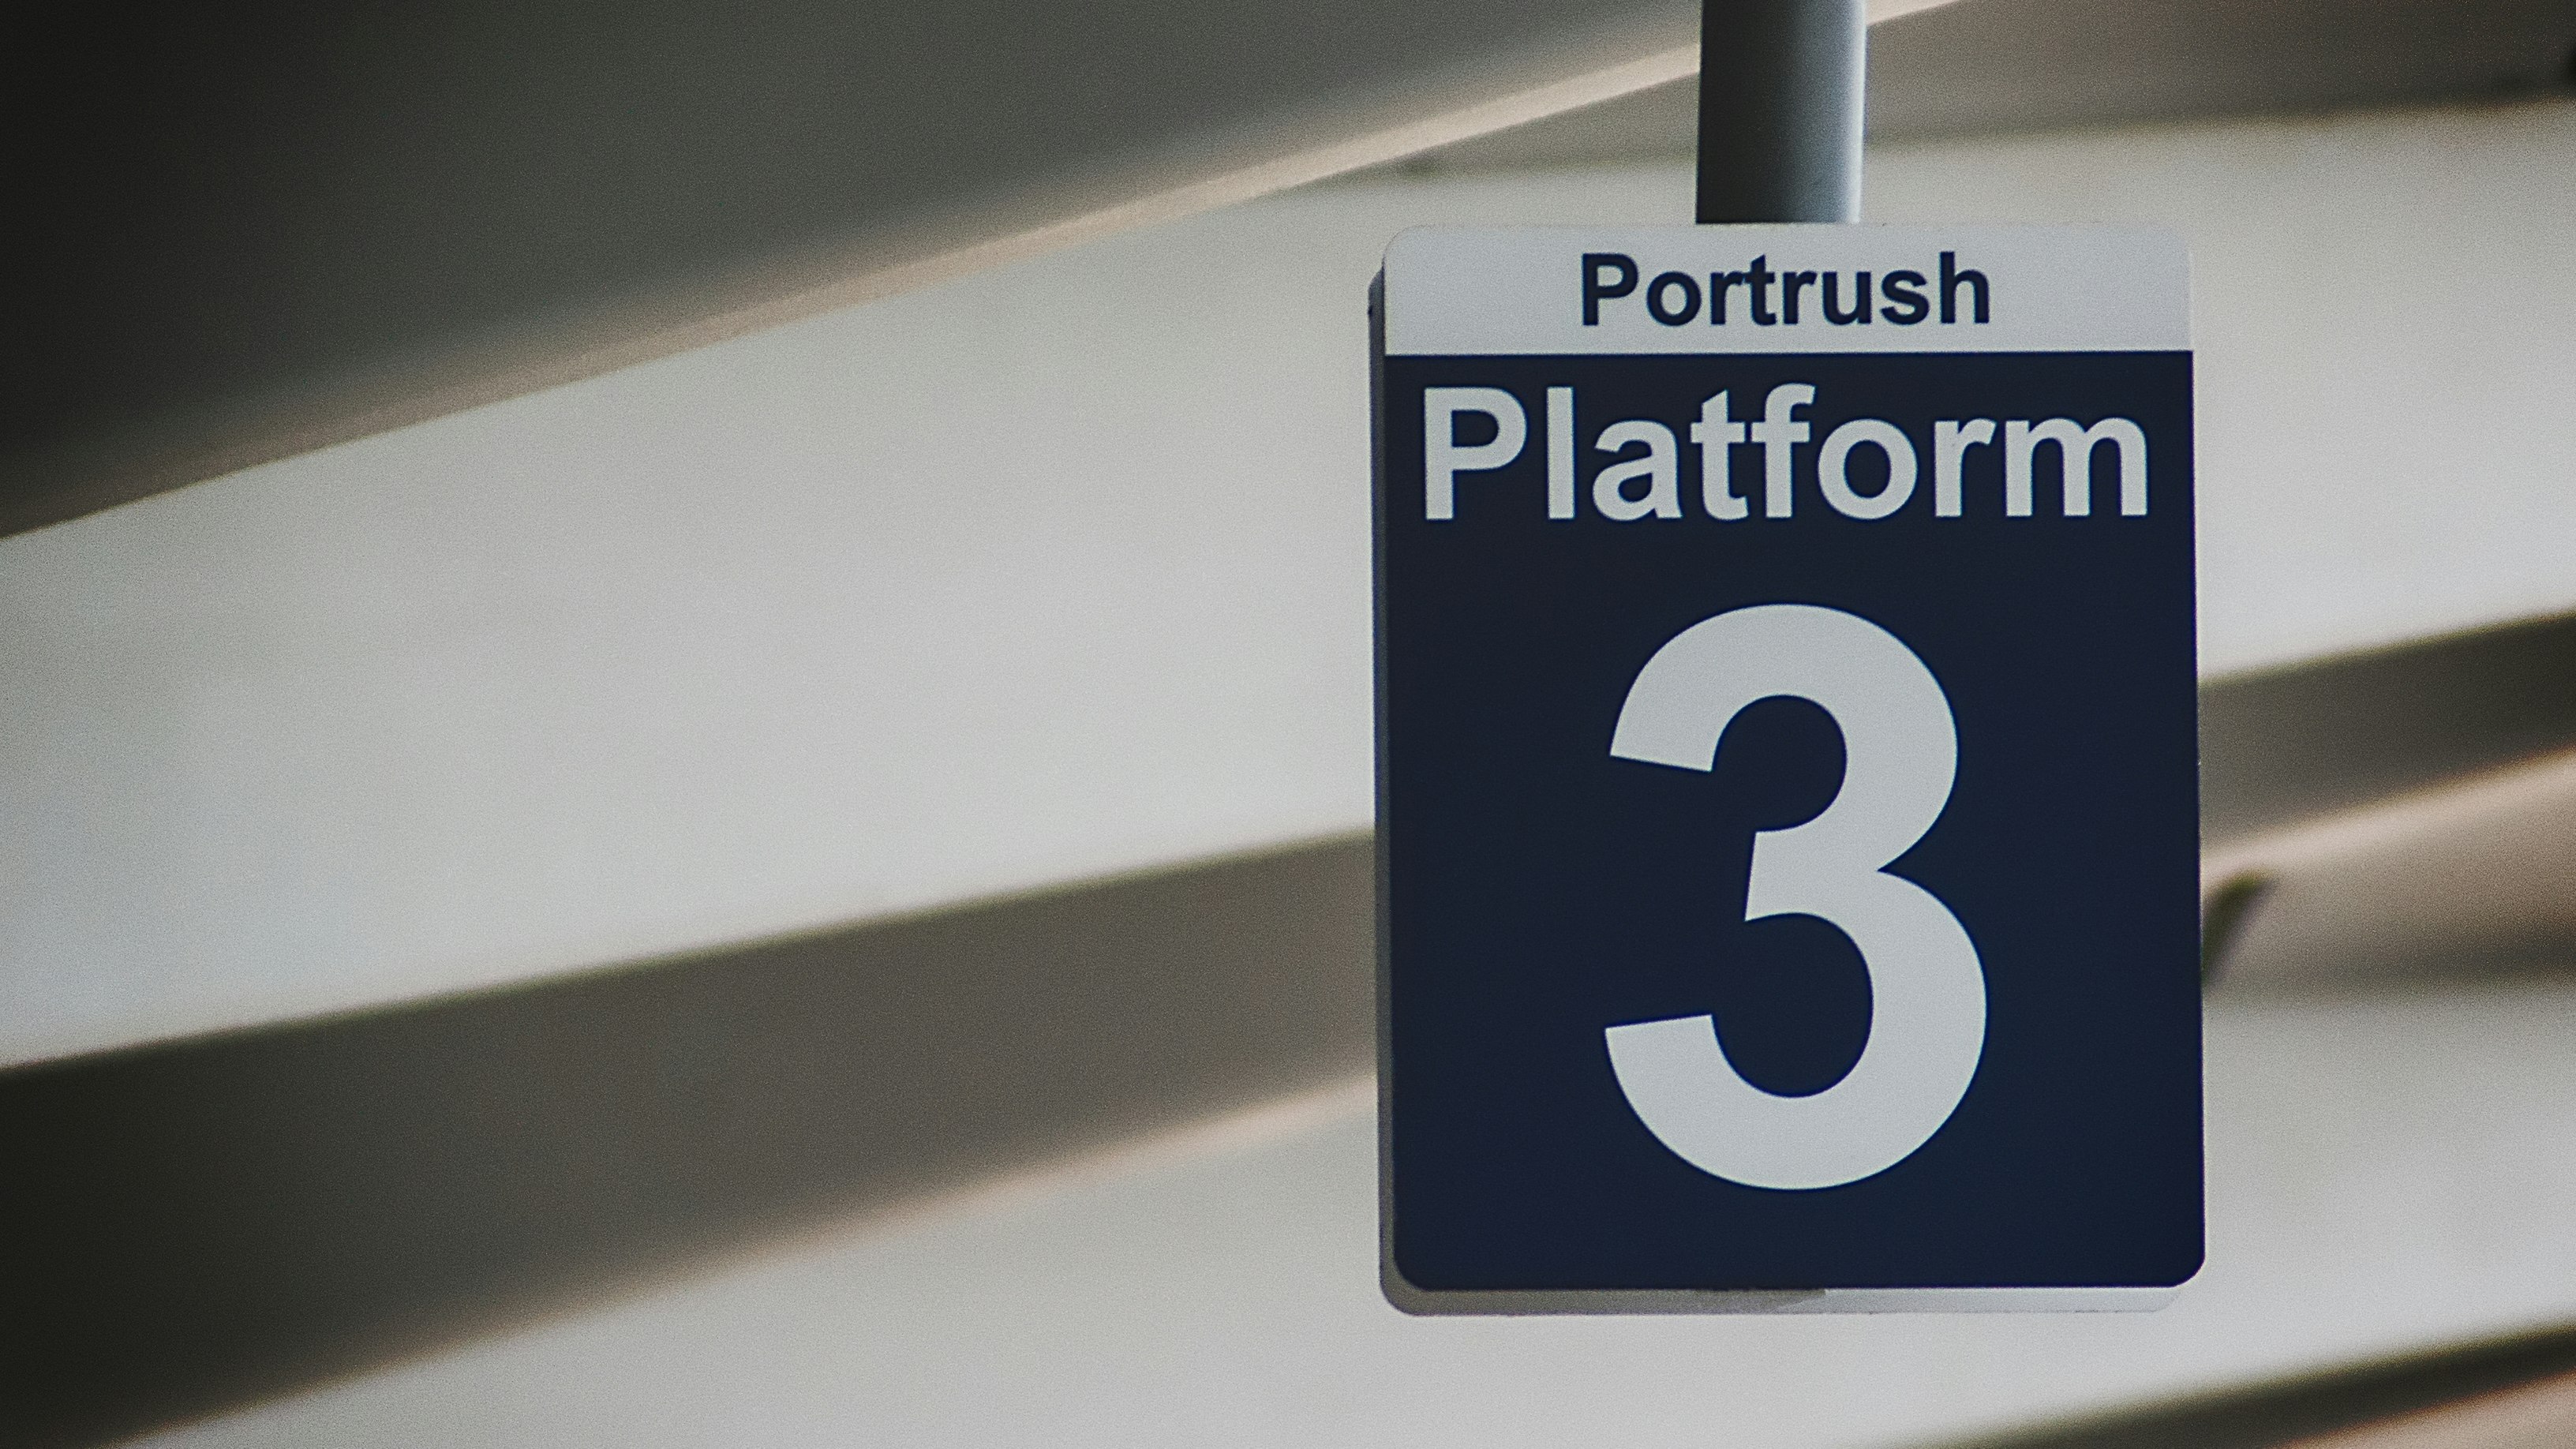 Portrush platform 3 signage